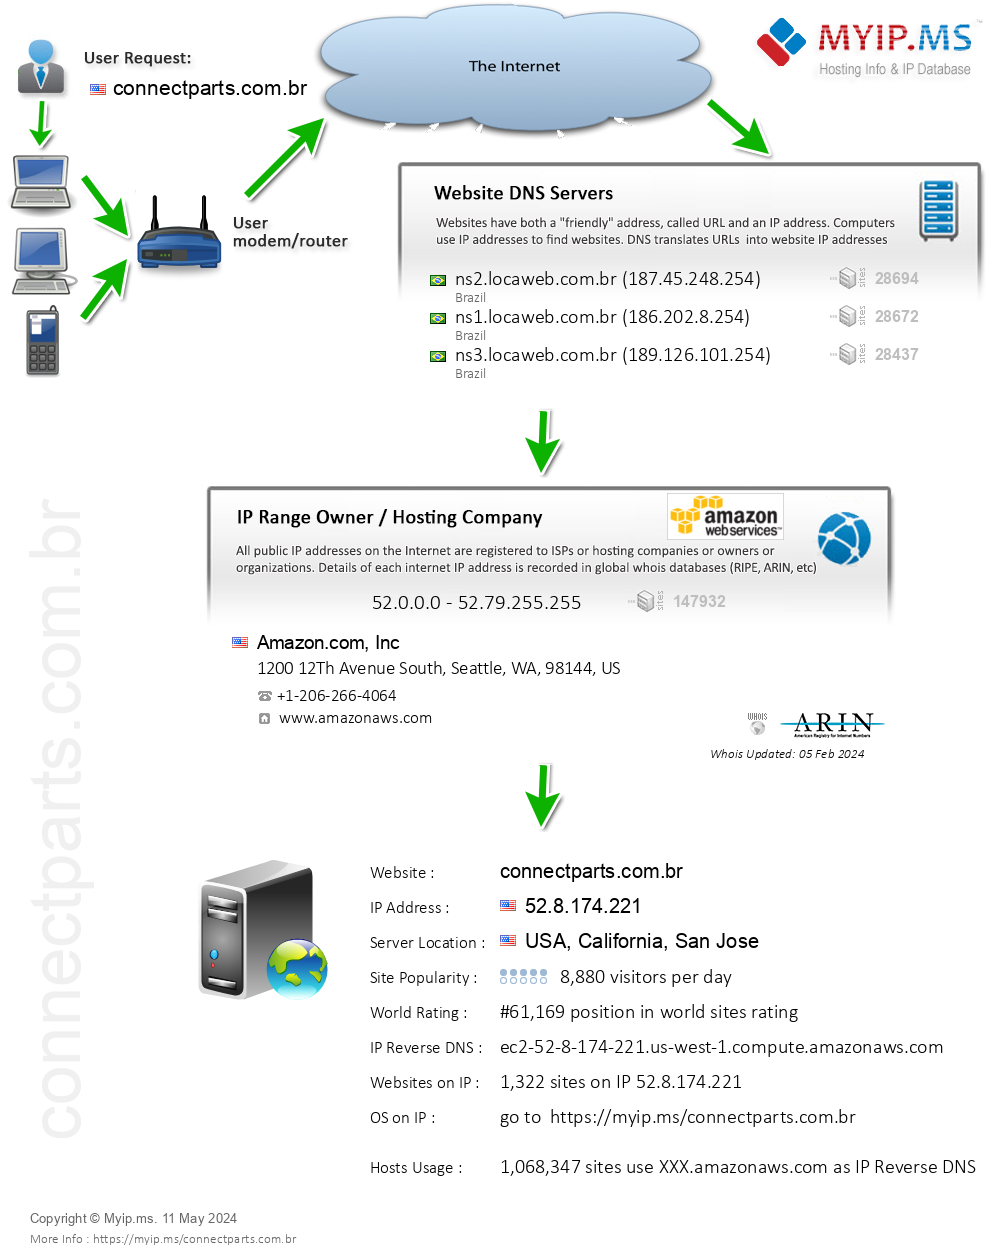 Connectparts.com.br - Website Hosting Visual IP Diagram